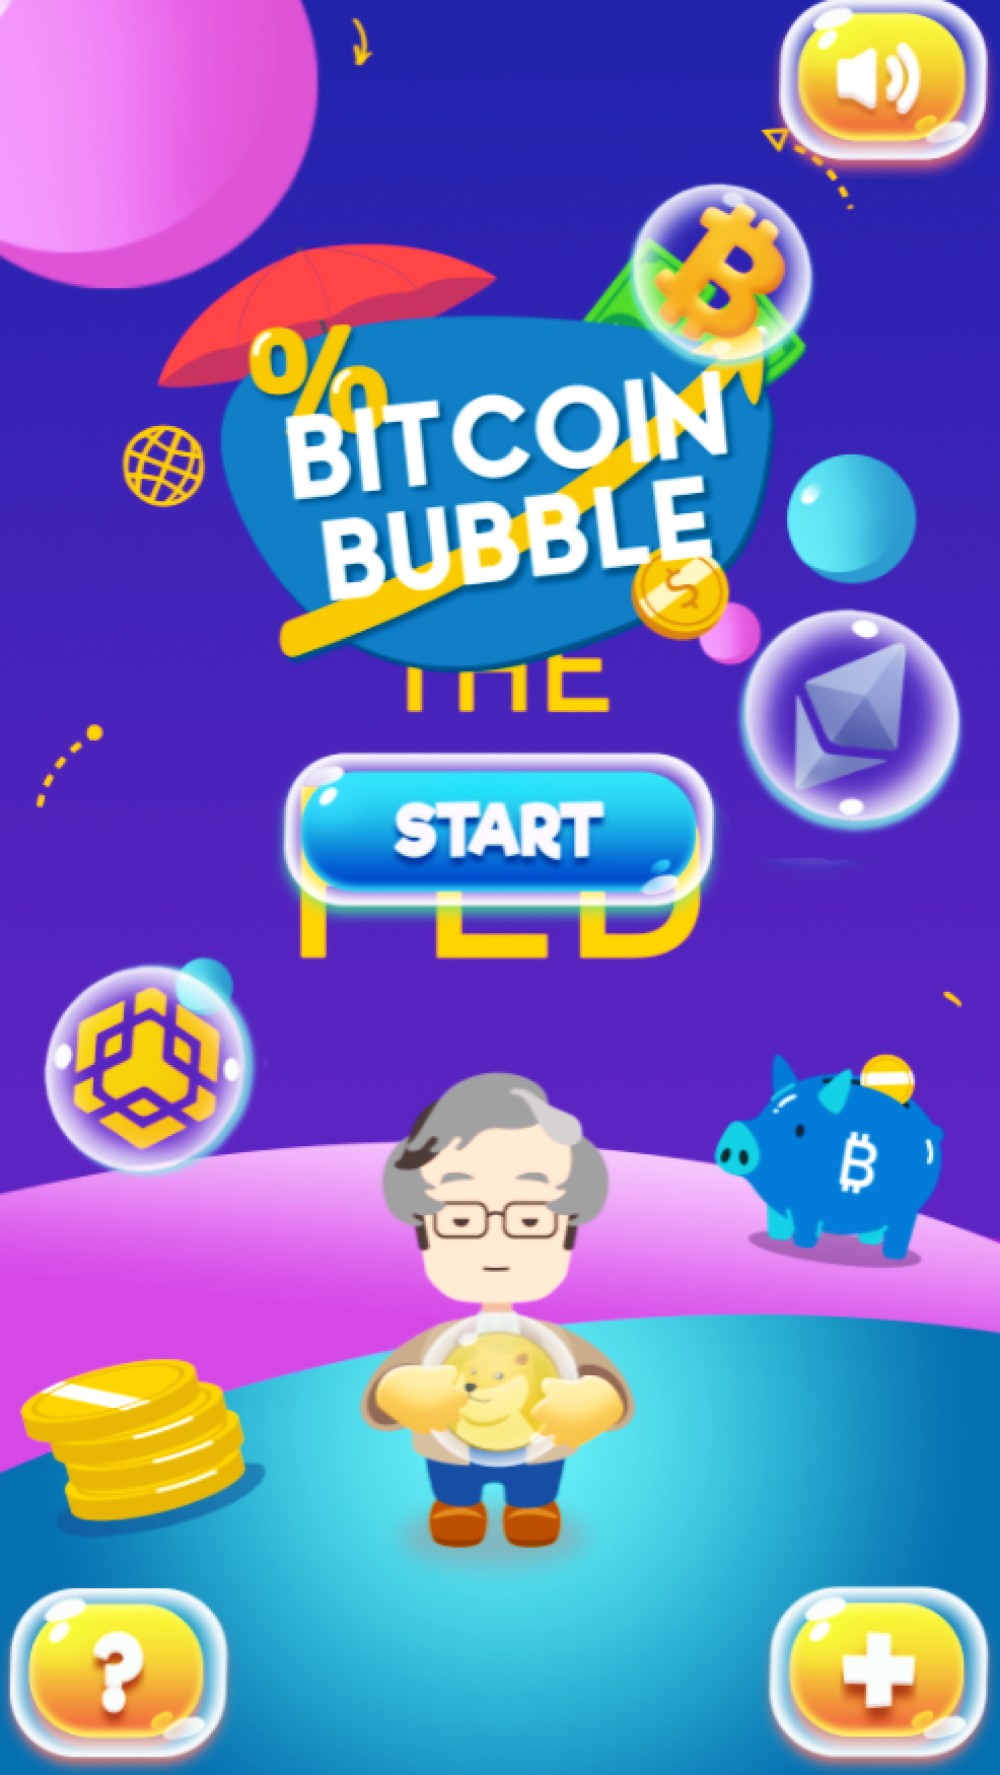 <img src="bitcoin.jpg" alt="bitcoin bubble shooter game"/>